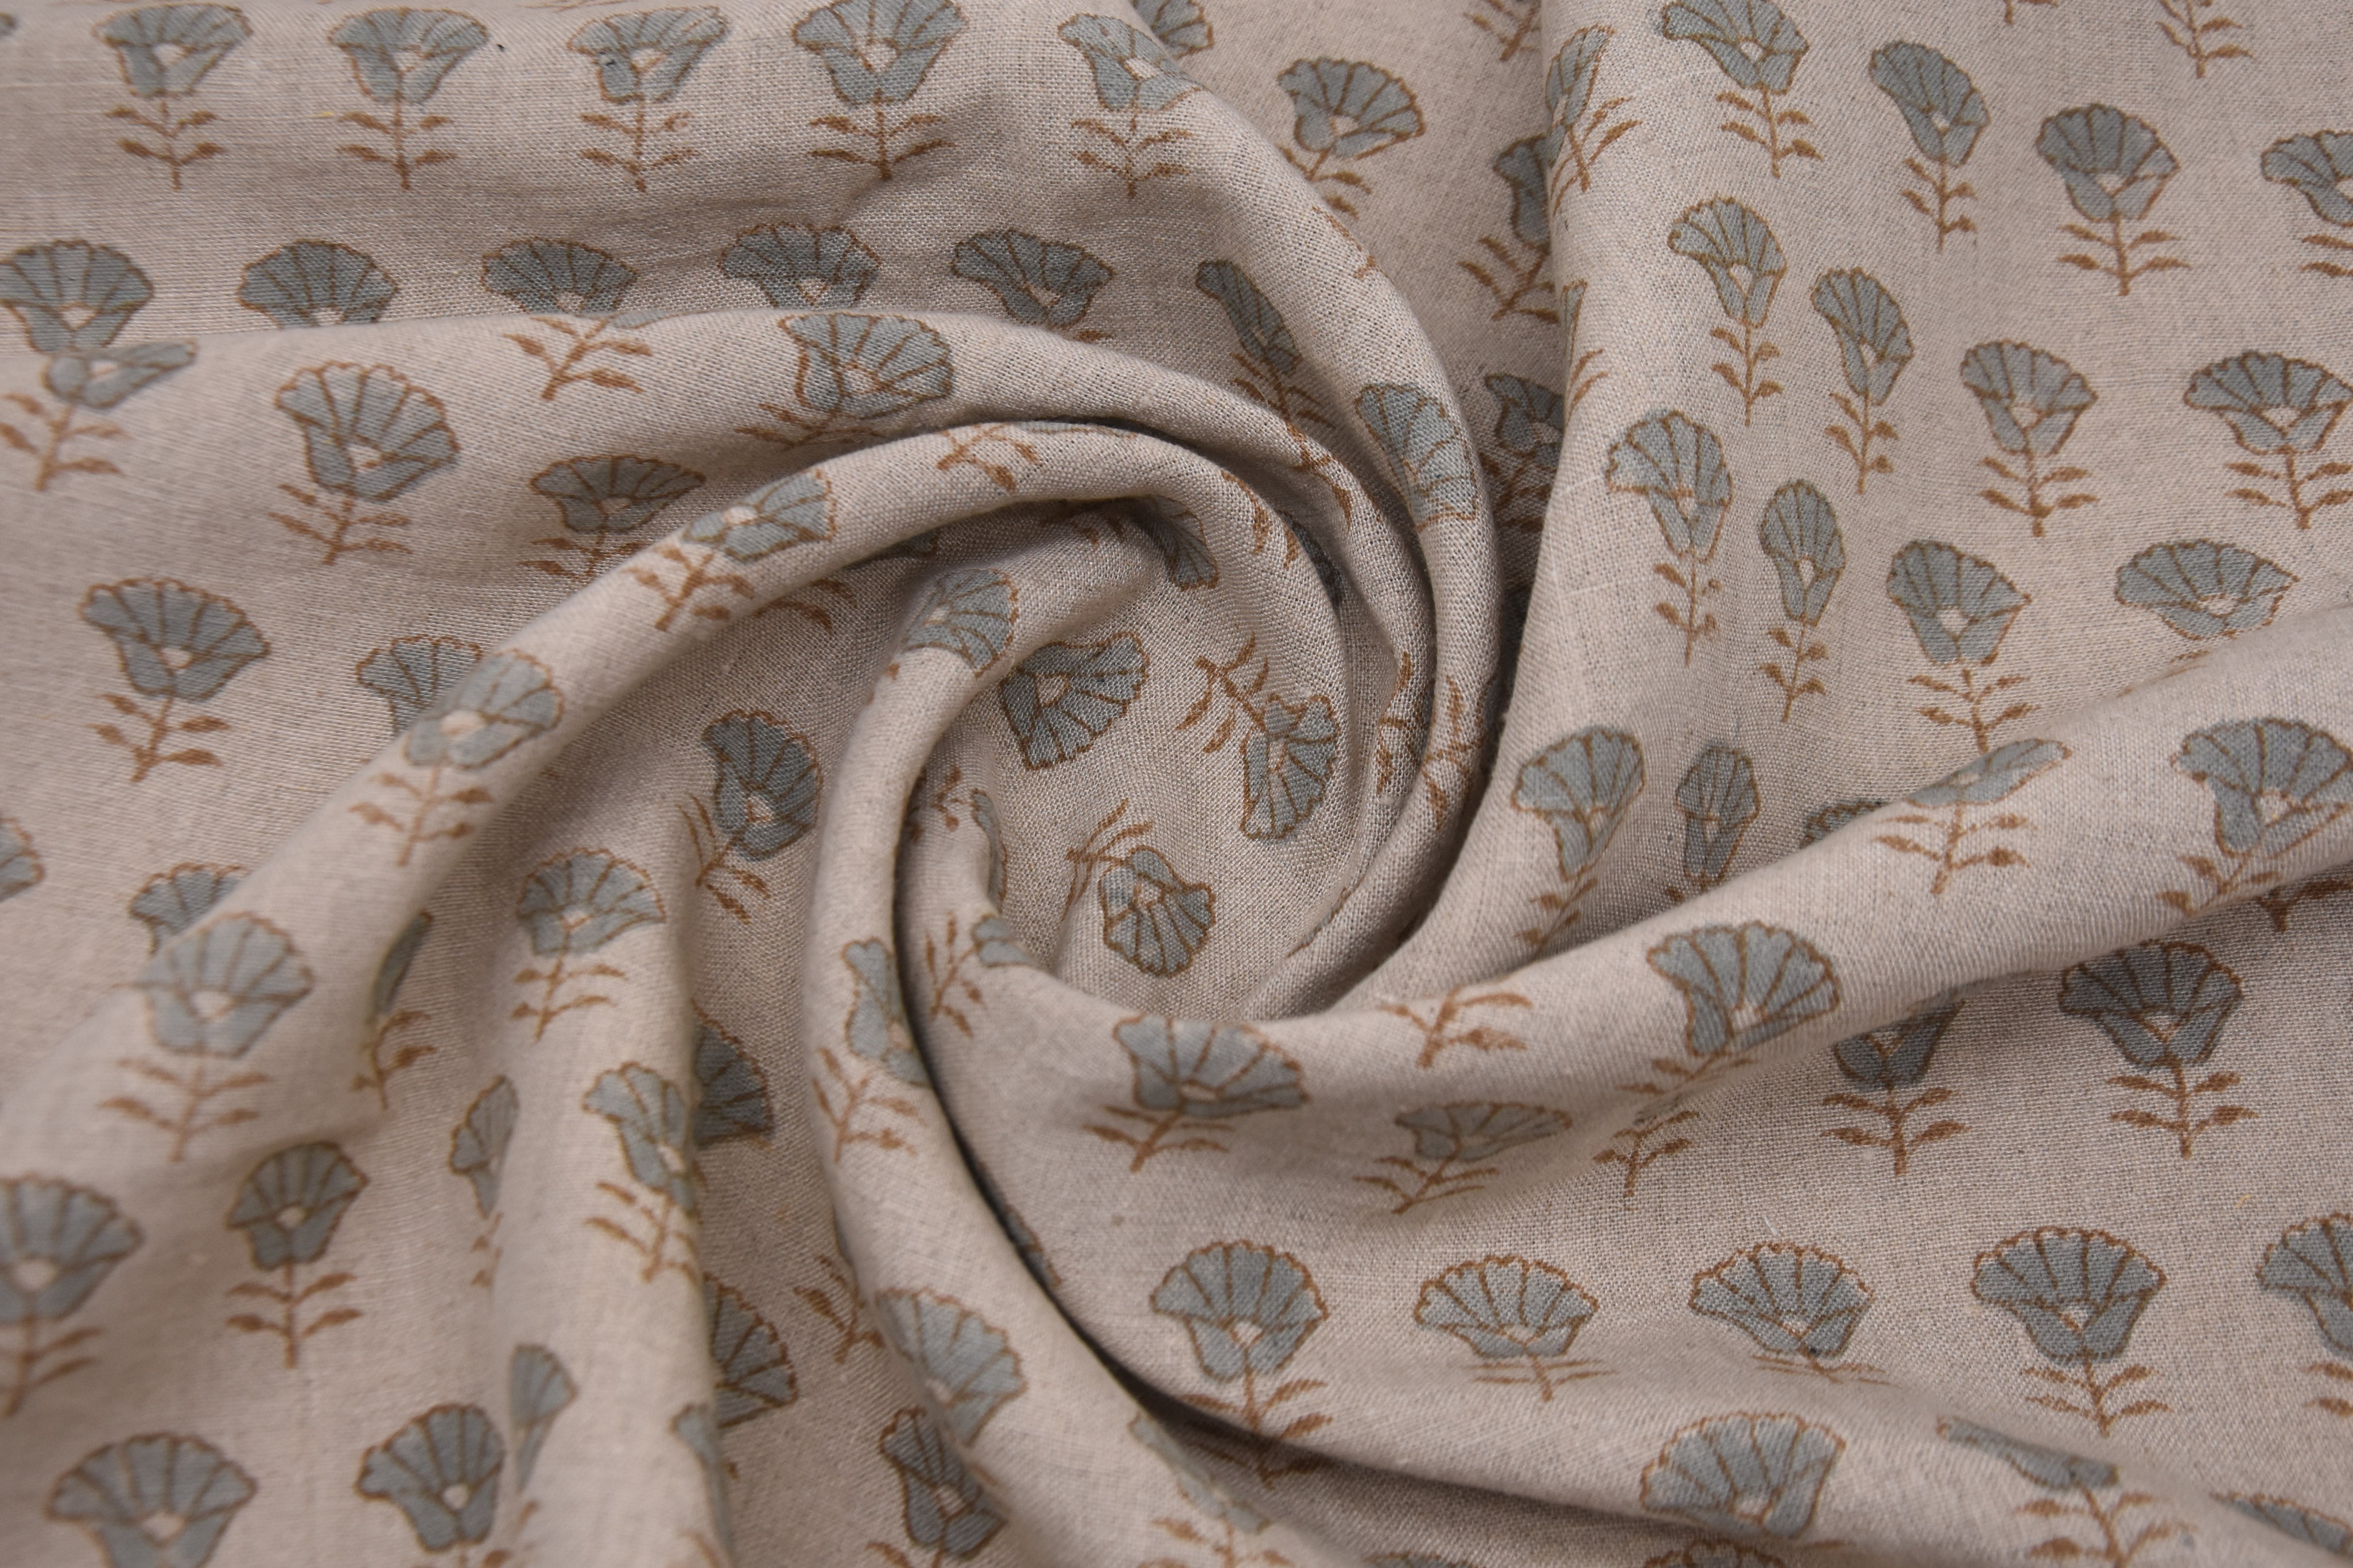 Hand block window curtains, upholstery fabric for pillows, pure linen 58" wide, hand block print, handmade floral art - KOHINOOR